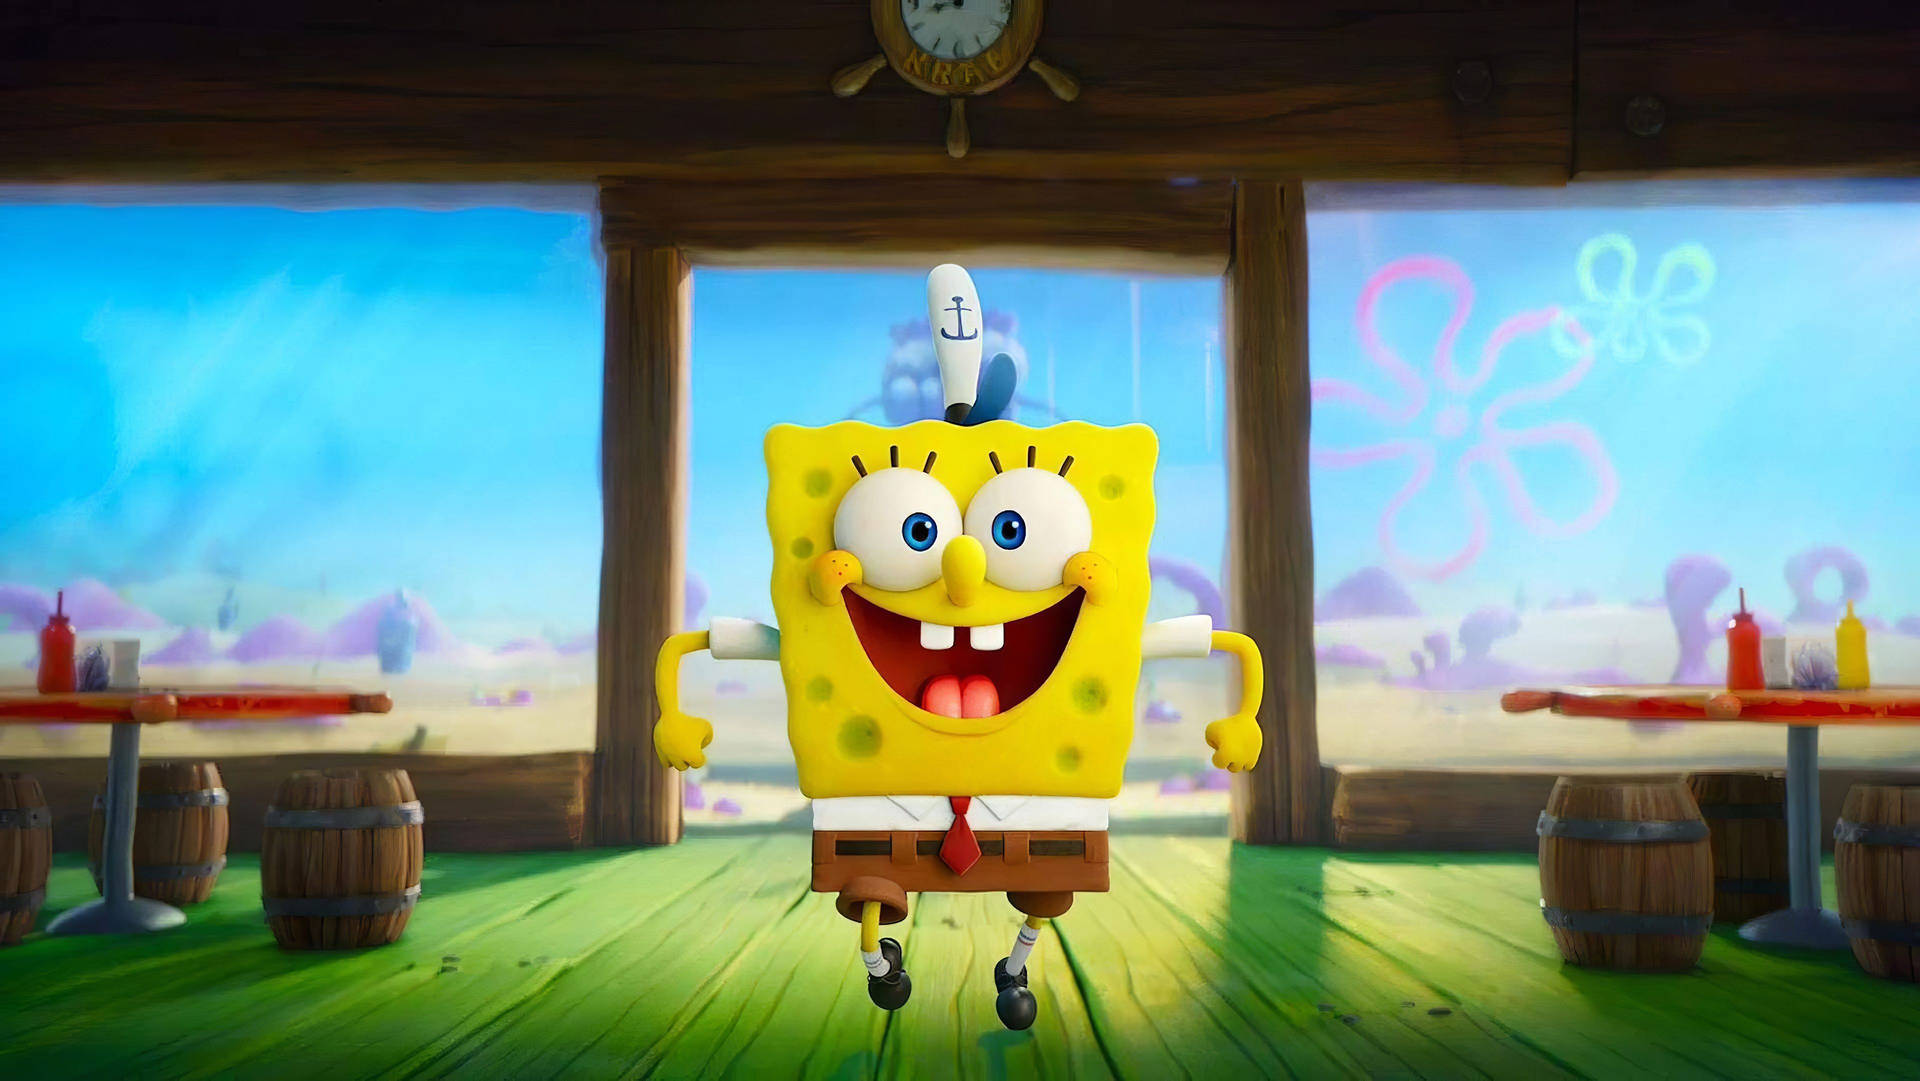 Cute Spongebob Squarepants Entering Krusty Crab